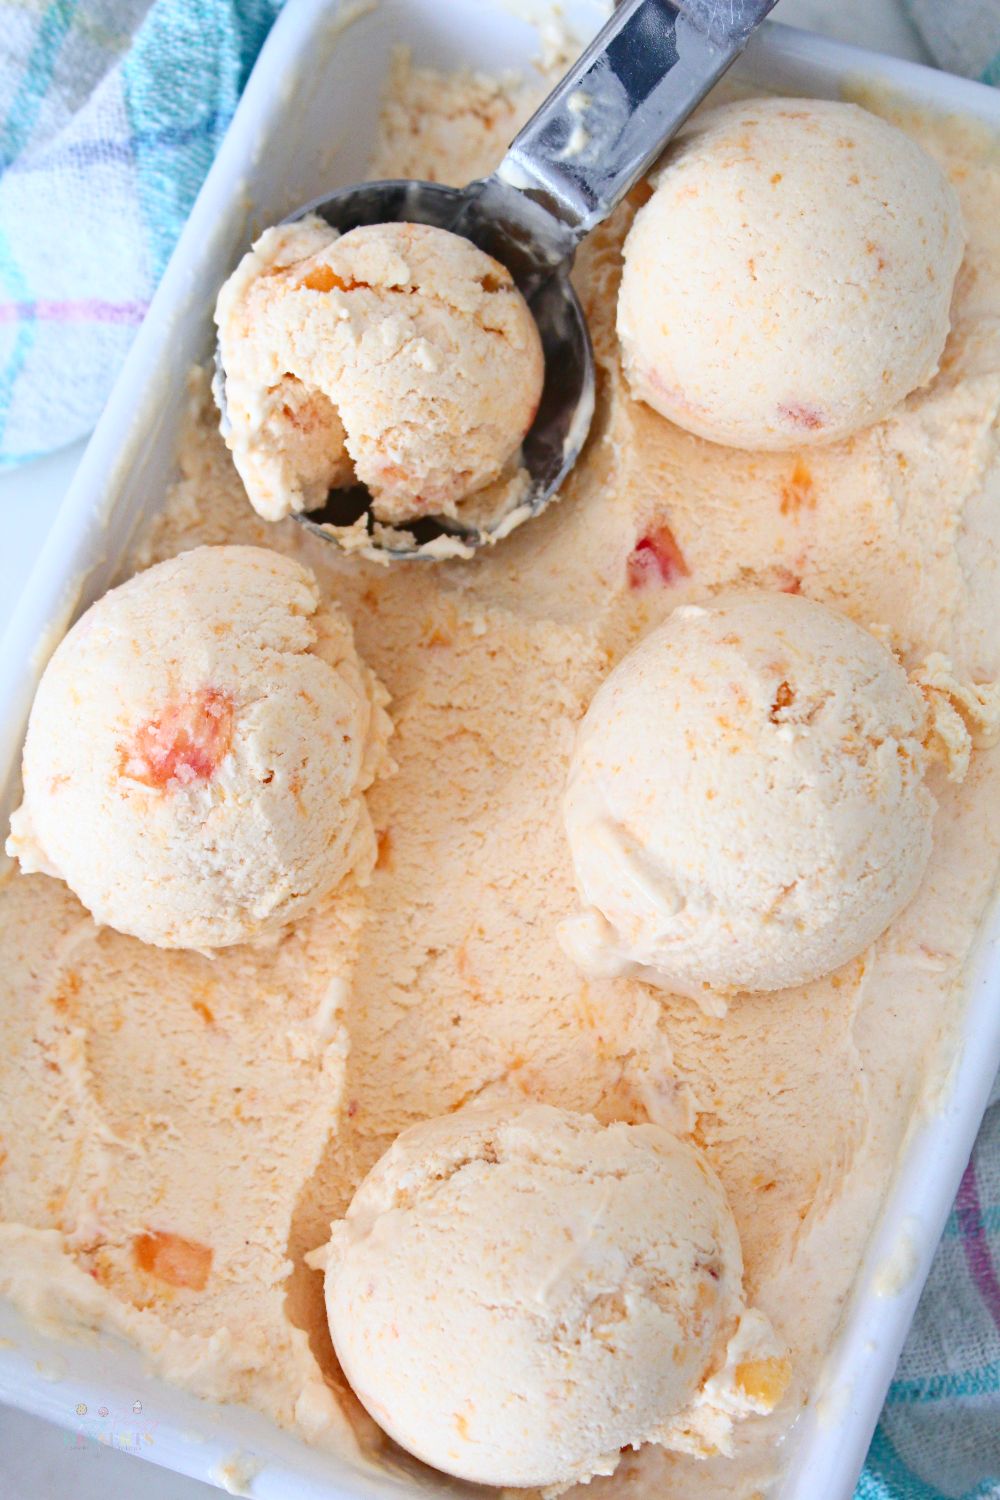 A few balls of peach ice cream in an ice cream container